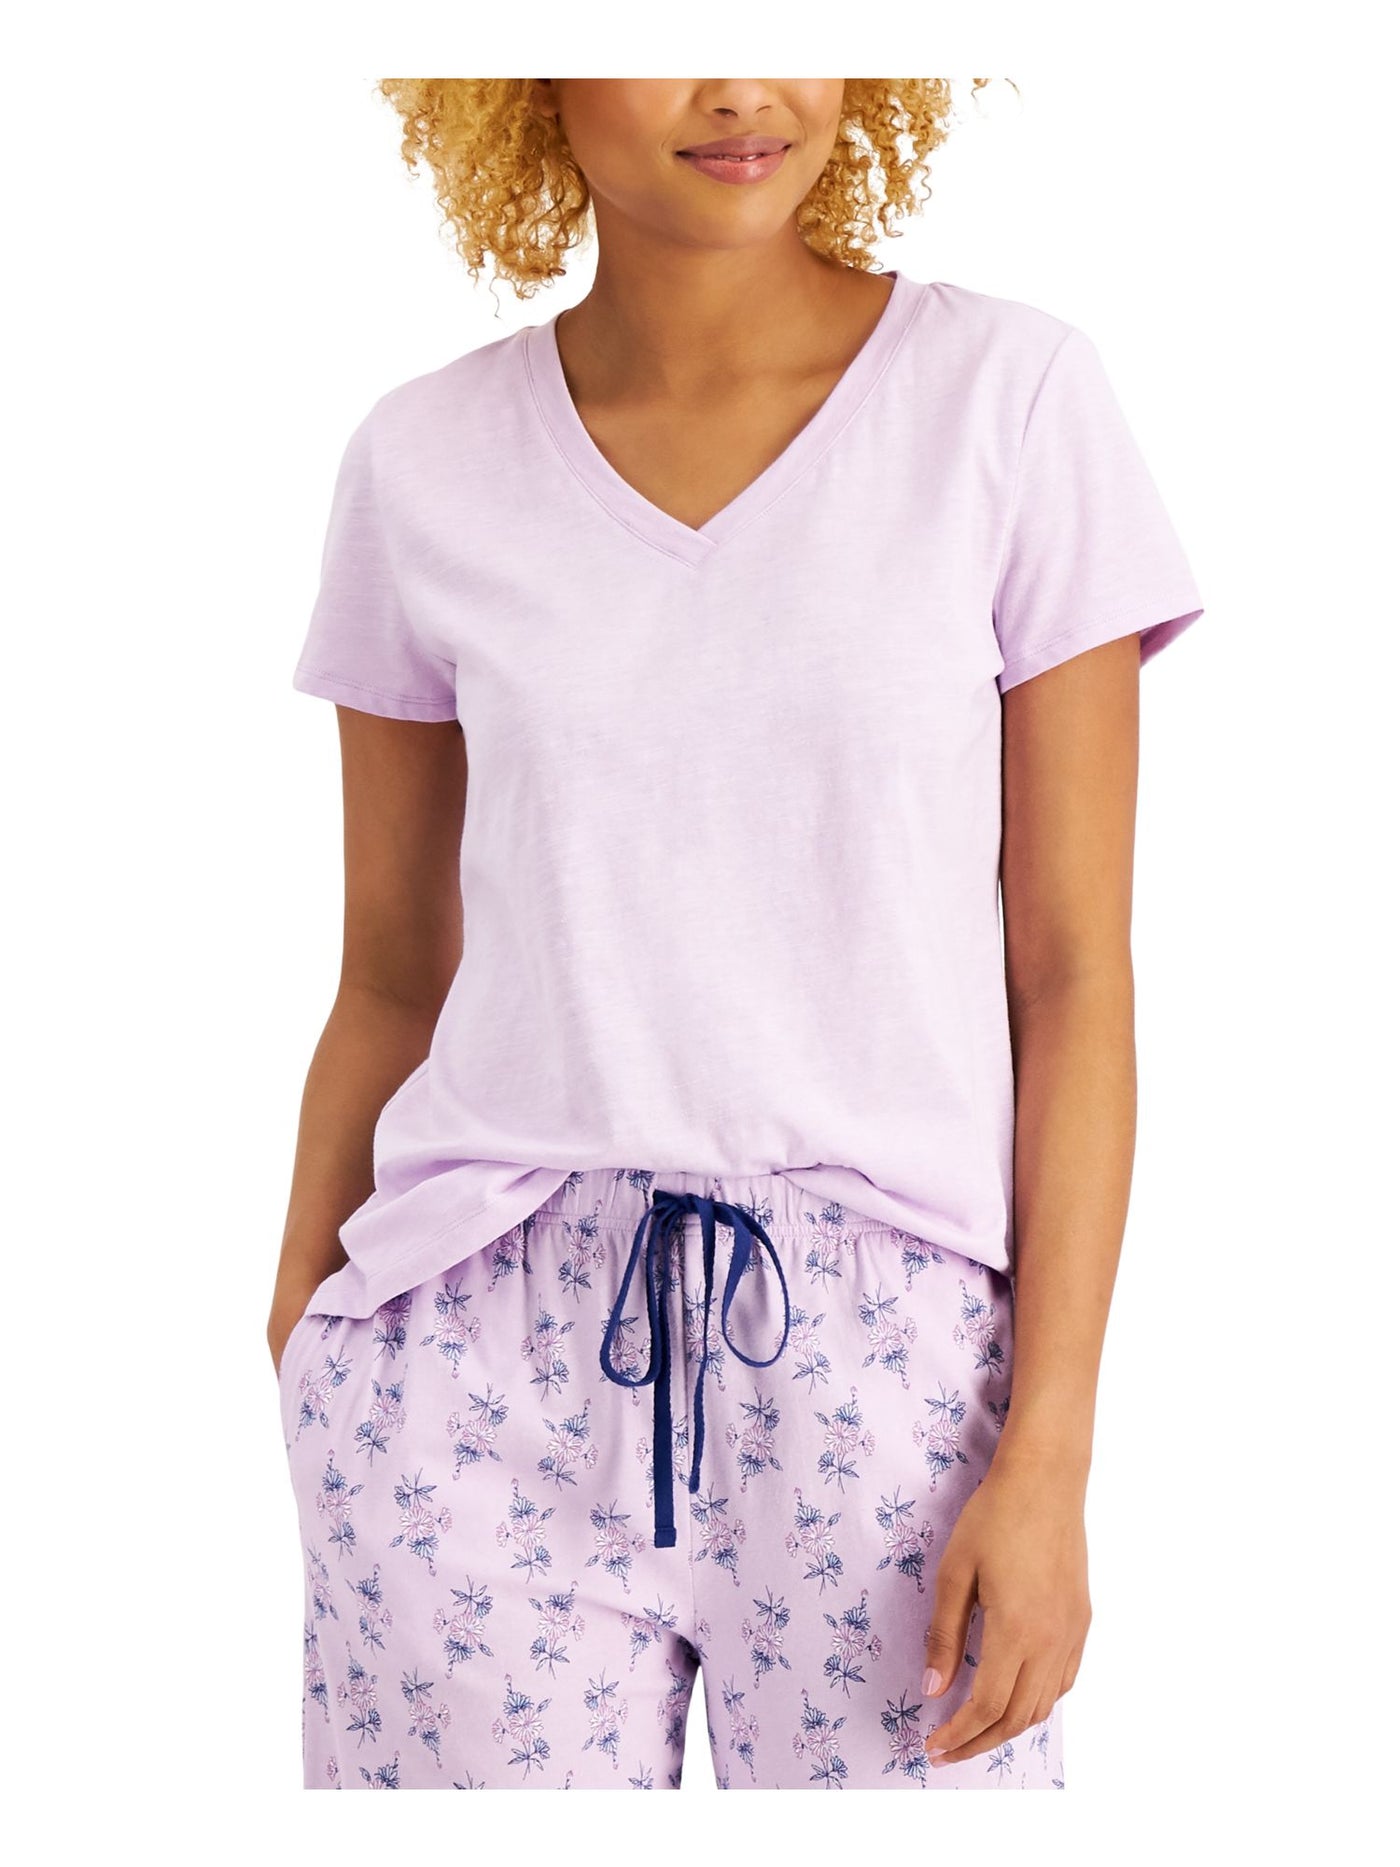 CHARTER CLUB Intimates Purple Cotton Blend V-Neck Sleep Shirt Pajama Top XS